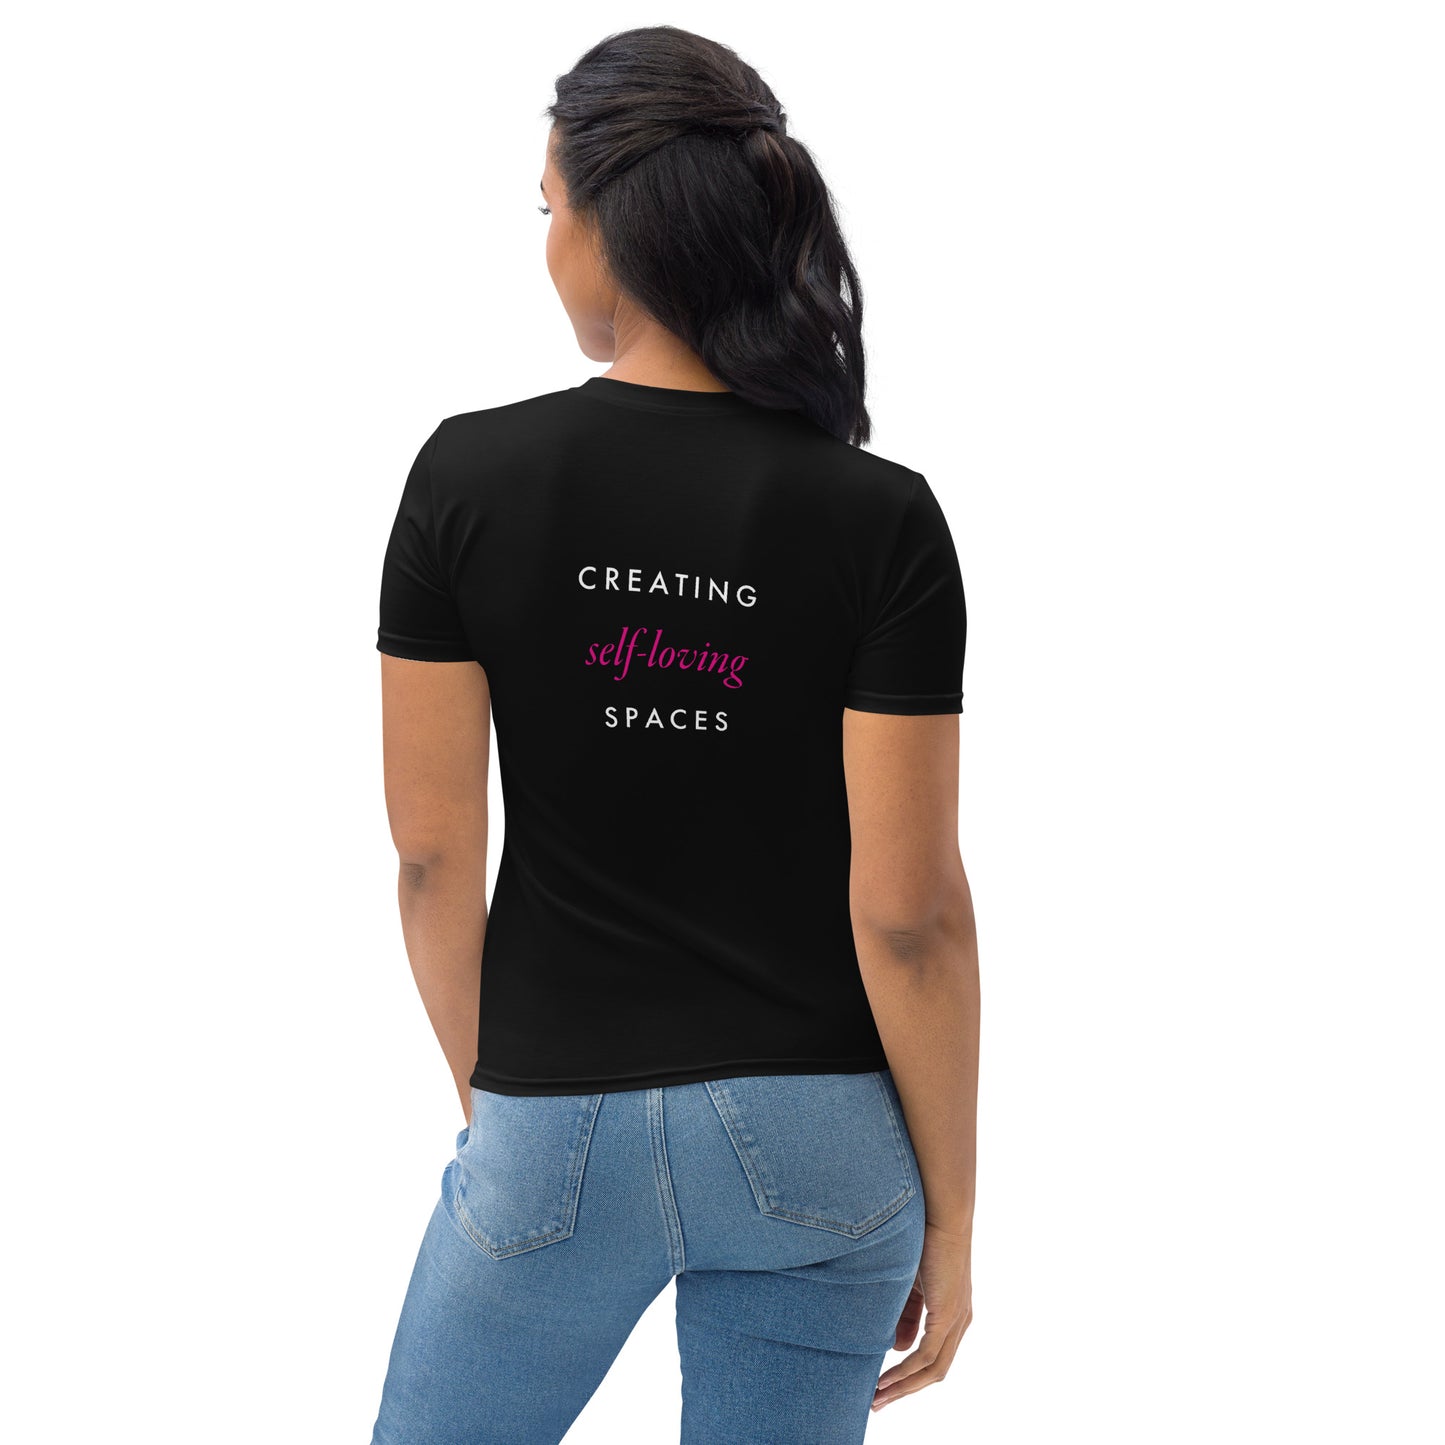 RE:Alignment Women's T-shirt